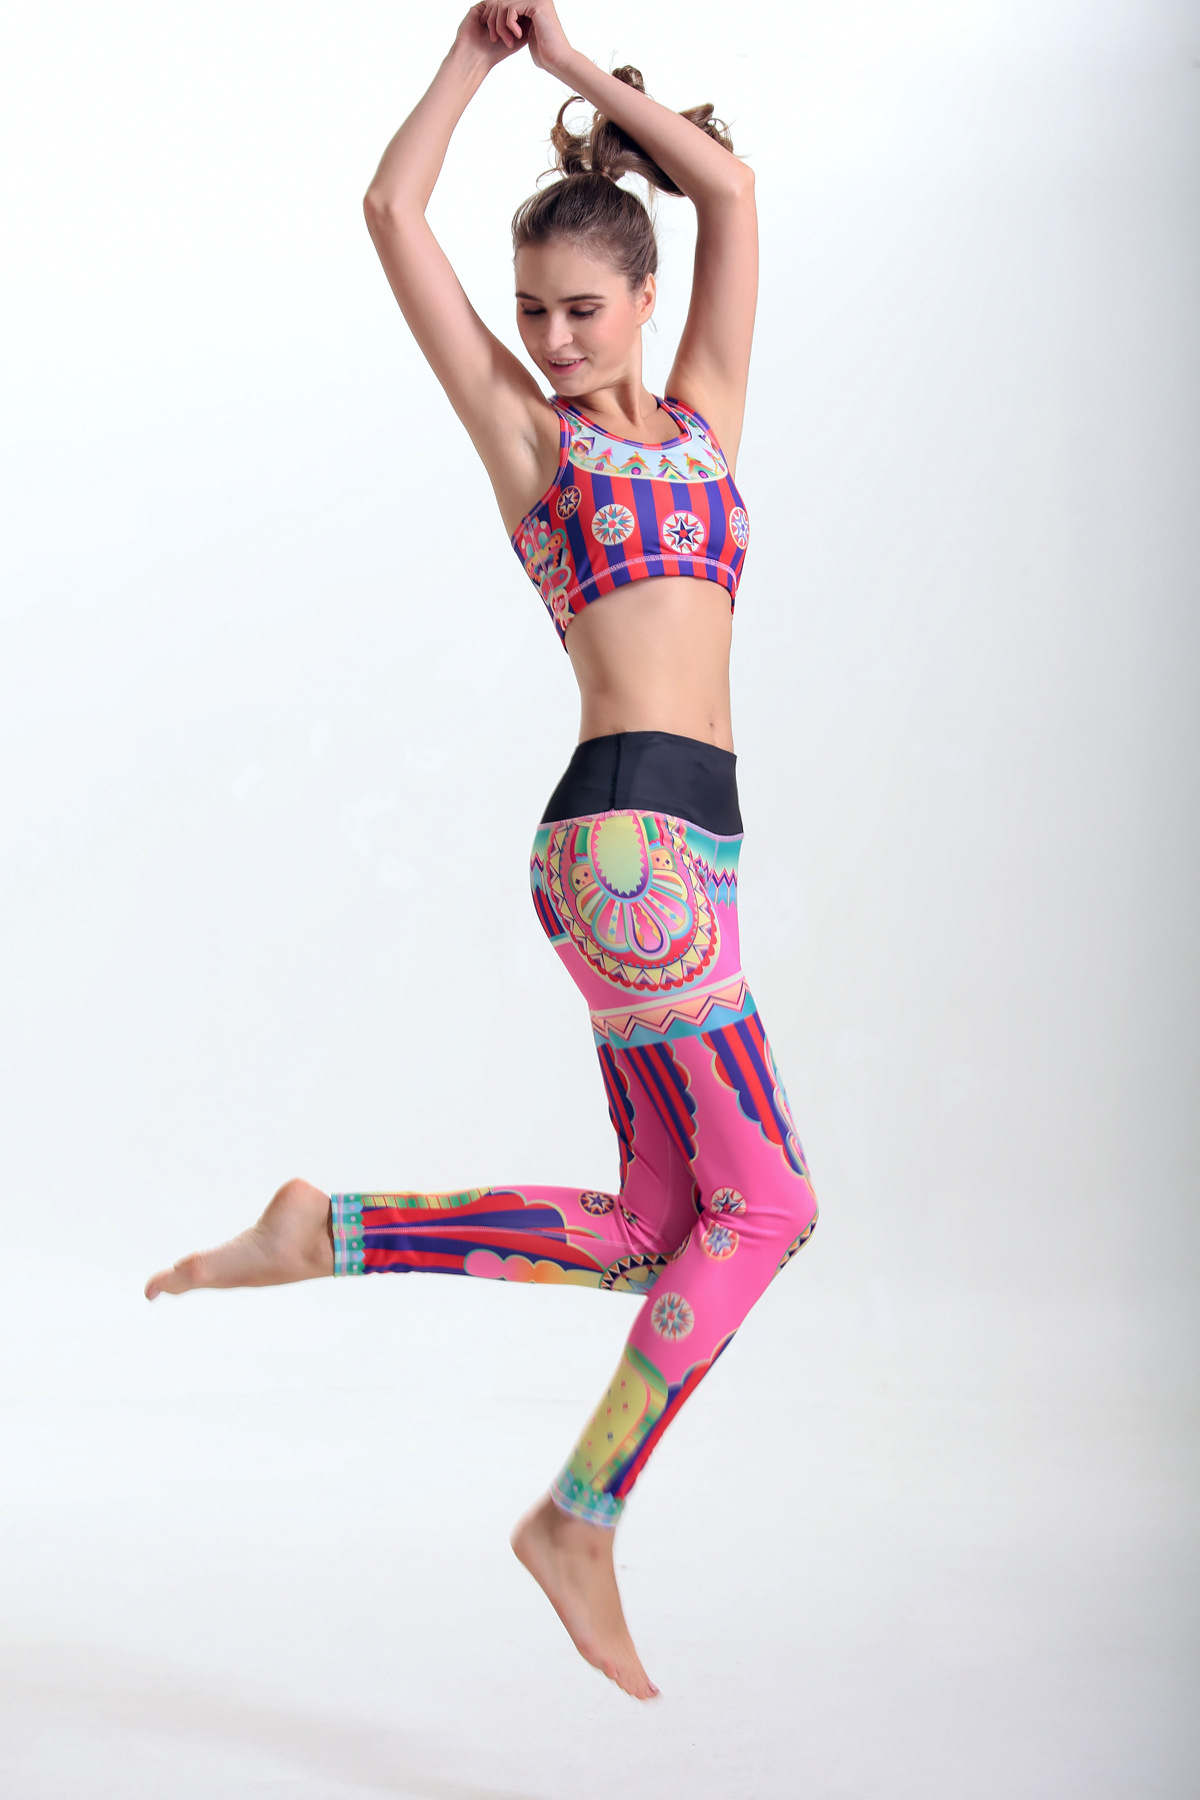 YG1105-1 Women s Printed Athletic Yoga Bra Tops and Legging Pants